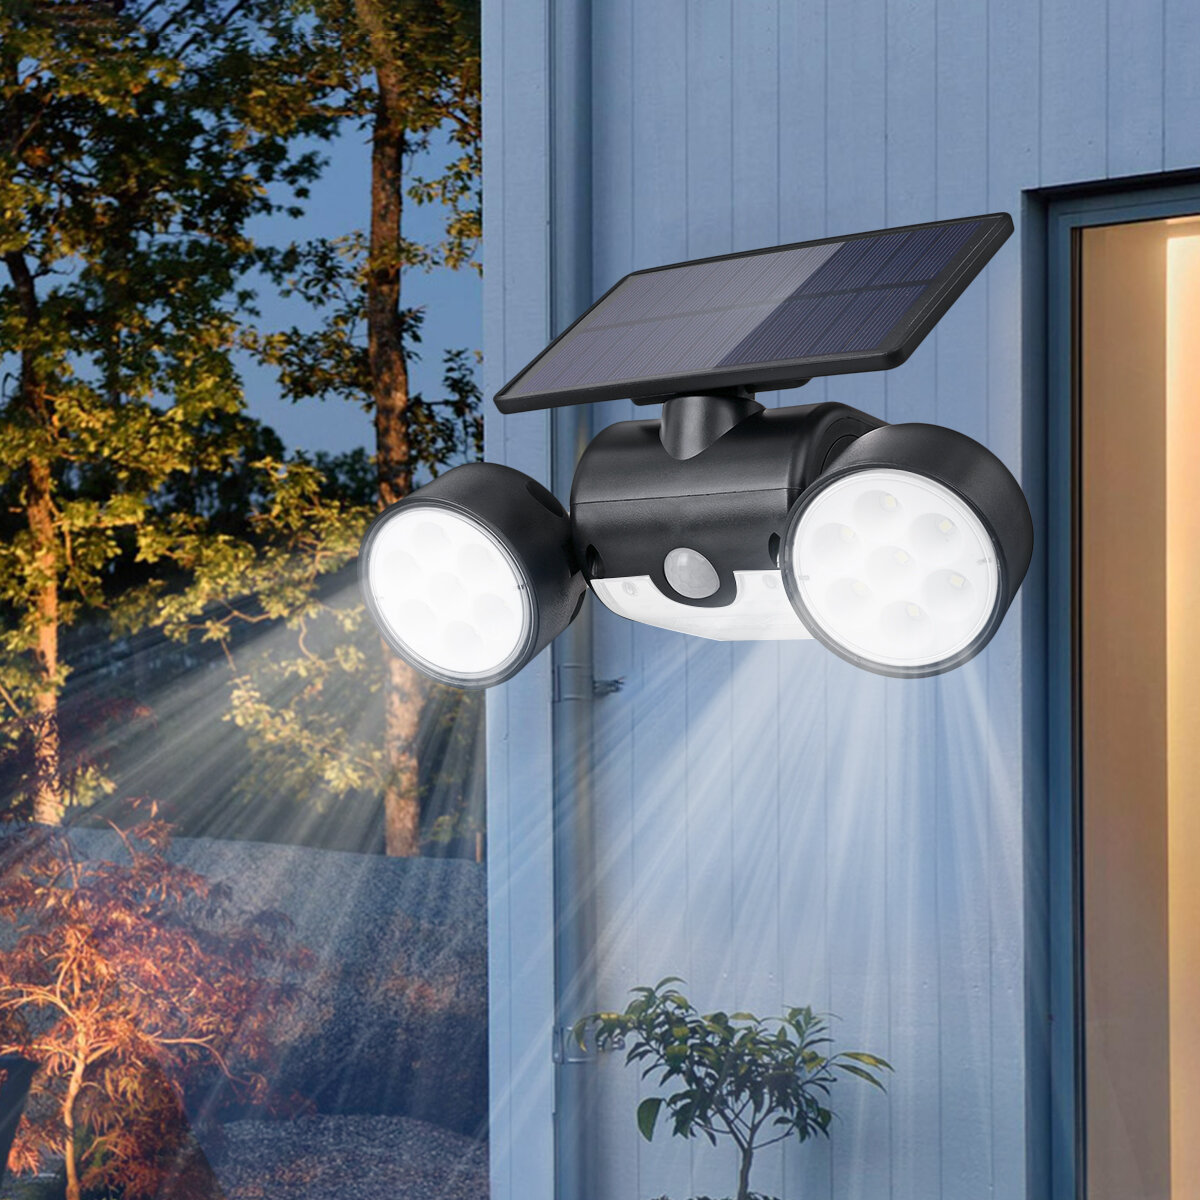 

LED Solar Power Street Light Double Head Spotlight PIR Motion Sensor Wall Lamp Outdoor Garden Path Yard Lighting